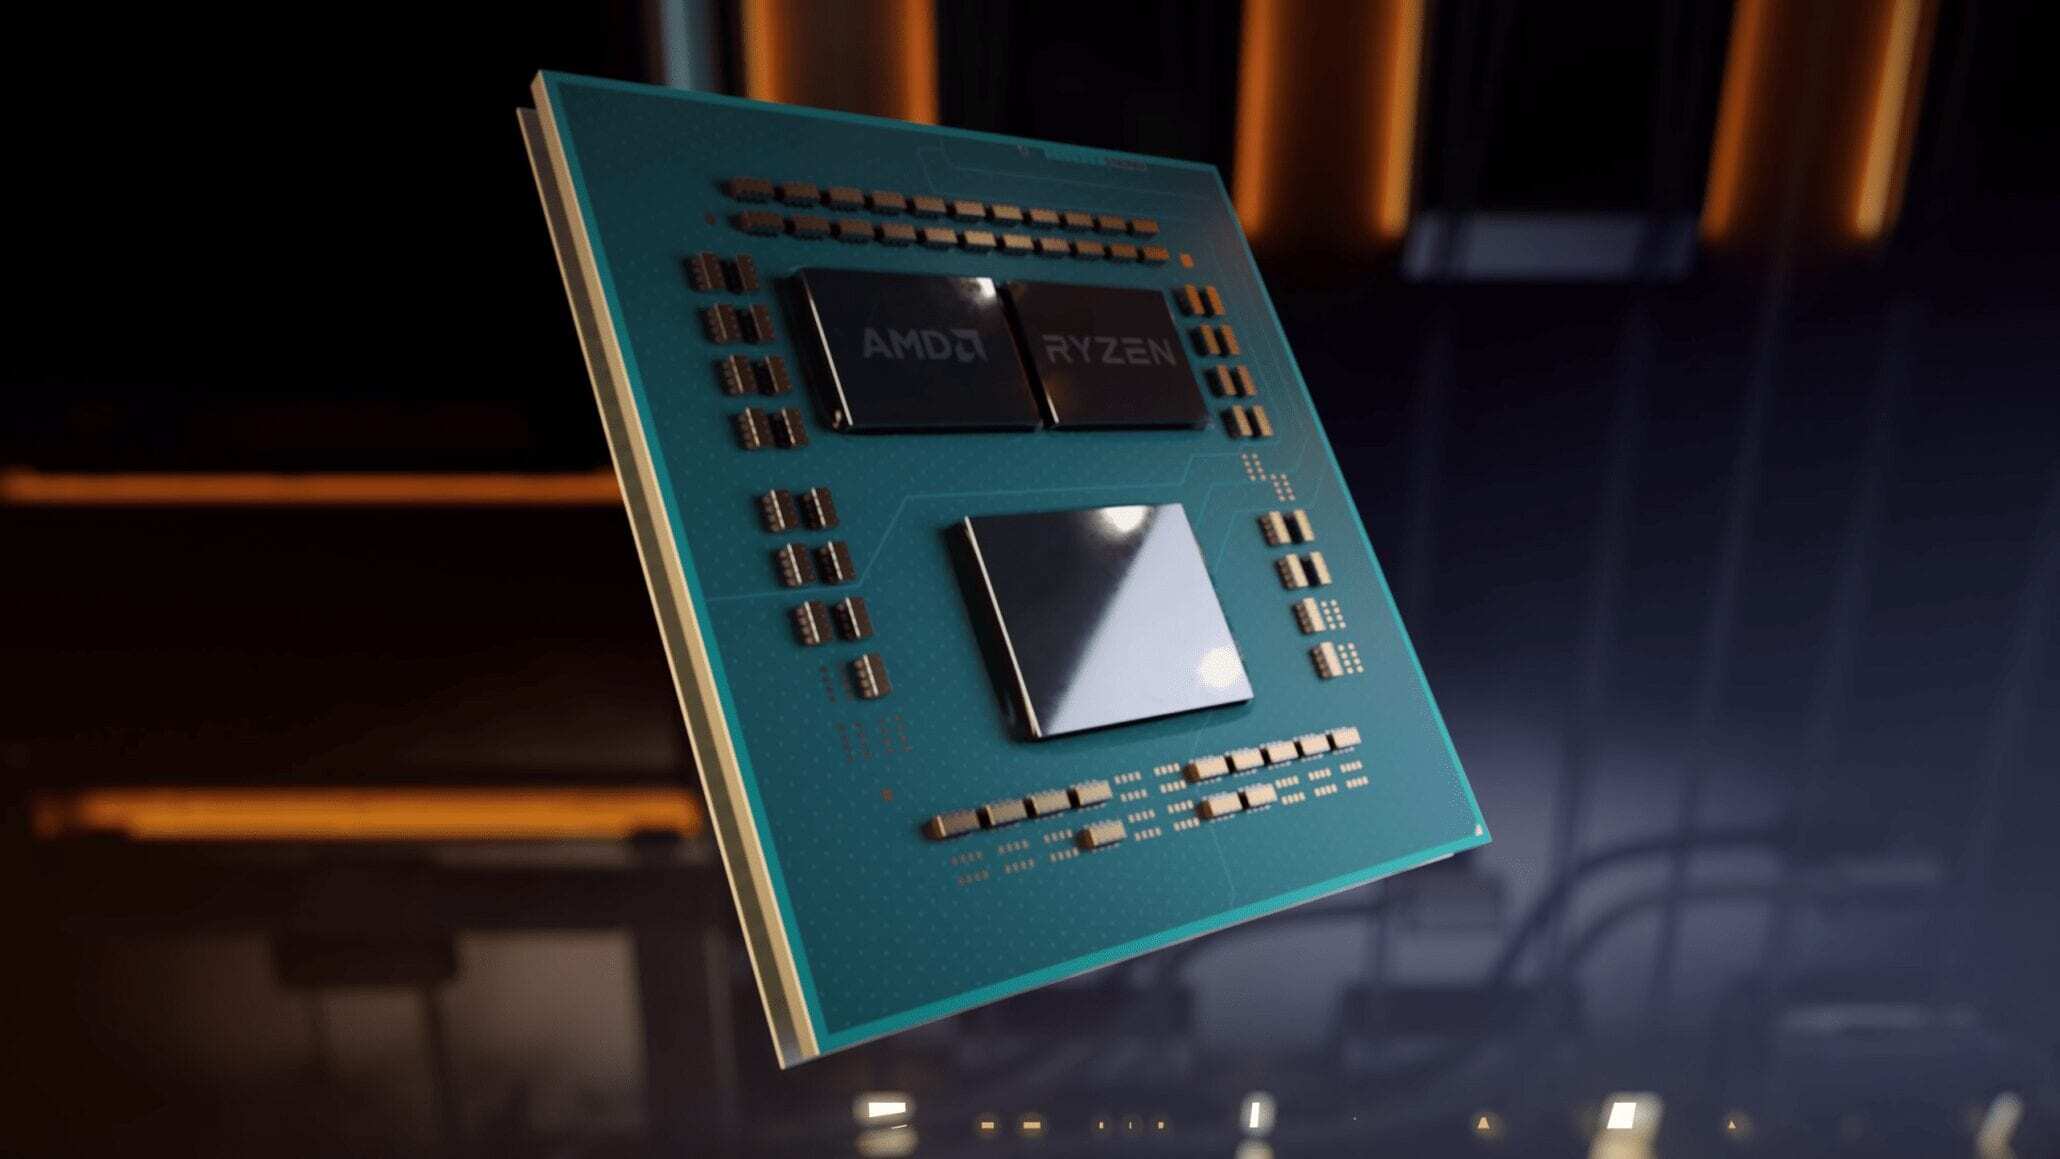  AMD    Intel